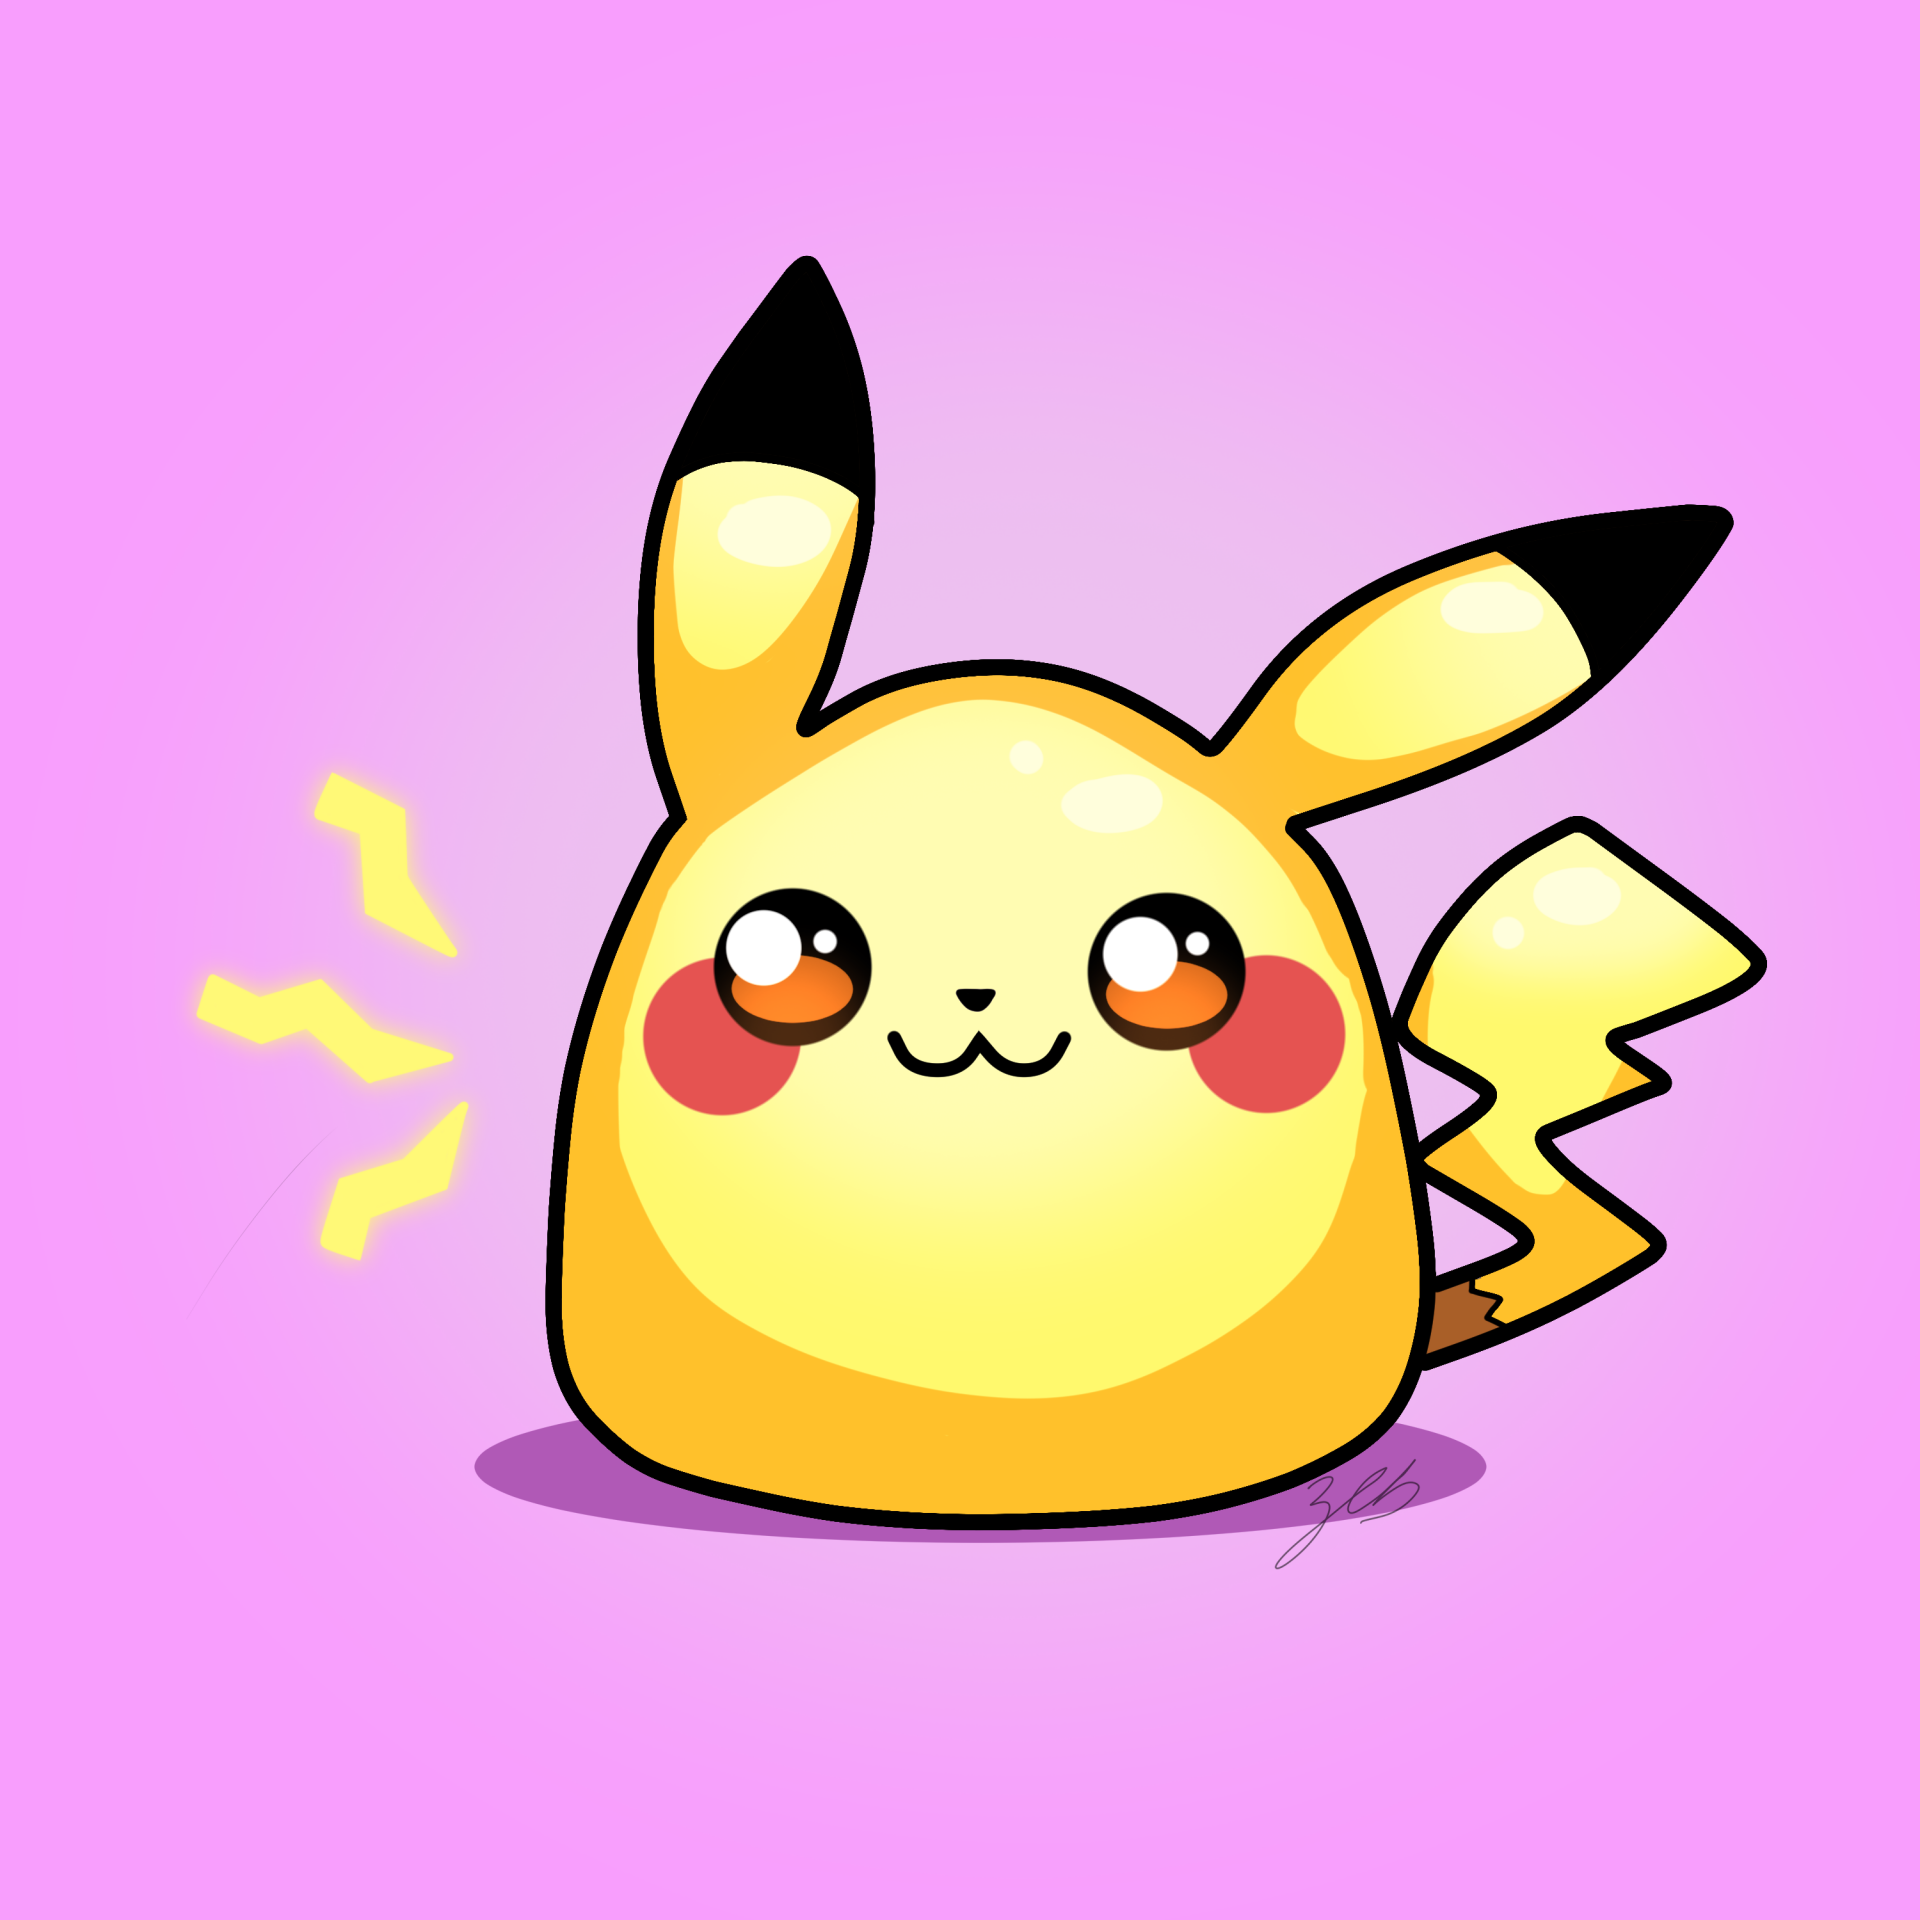 Drawing Tutorial On Pokemon Pikachu, Step by Step, Drawing Guide, by  xxsoulsurvivorxx - DragoArt